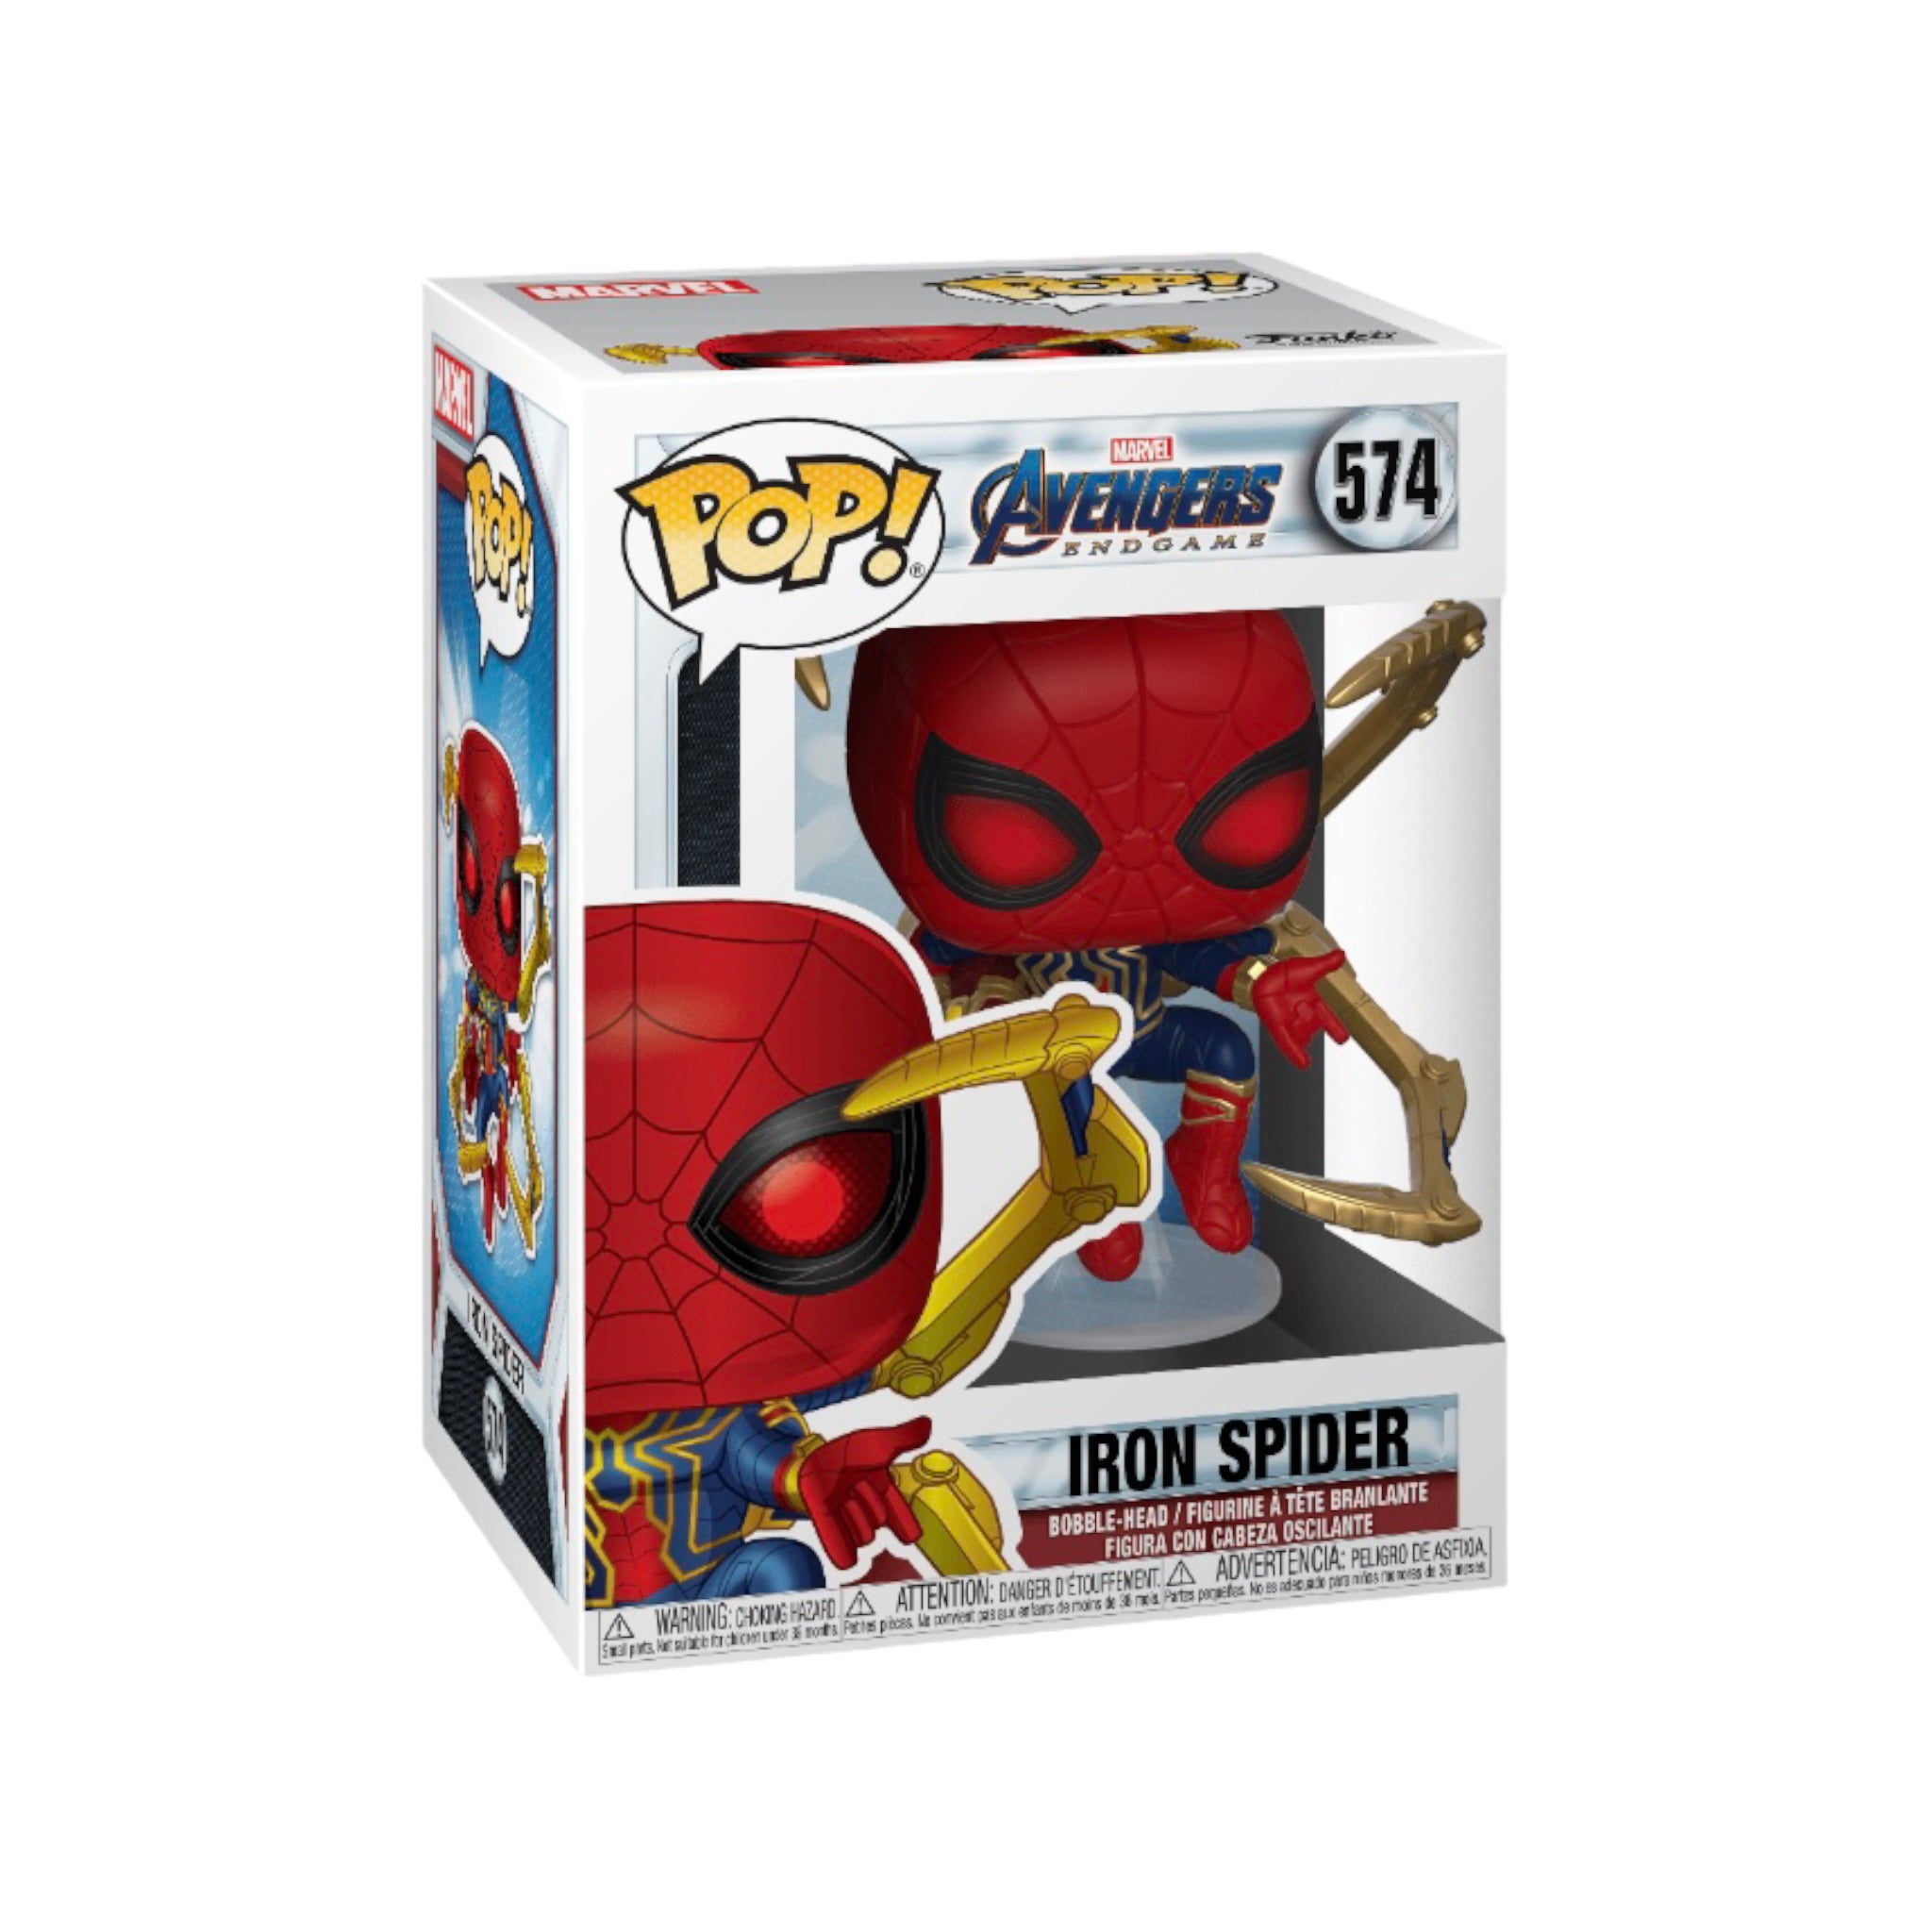 Iron Spider #574 Funko Pop! - Avengers Endgame